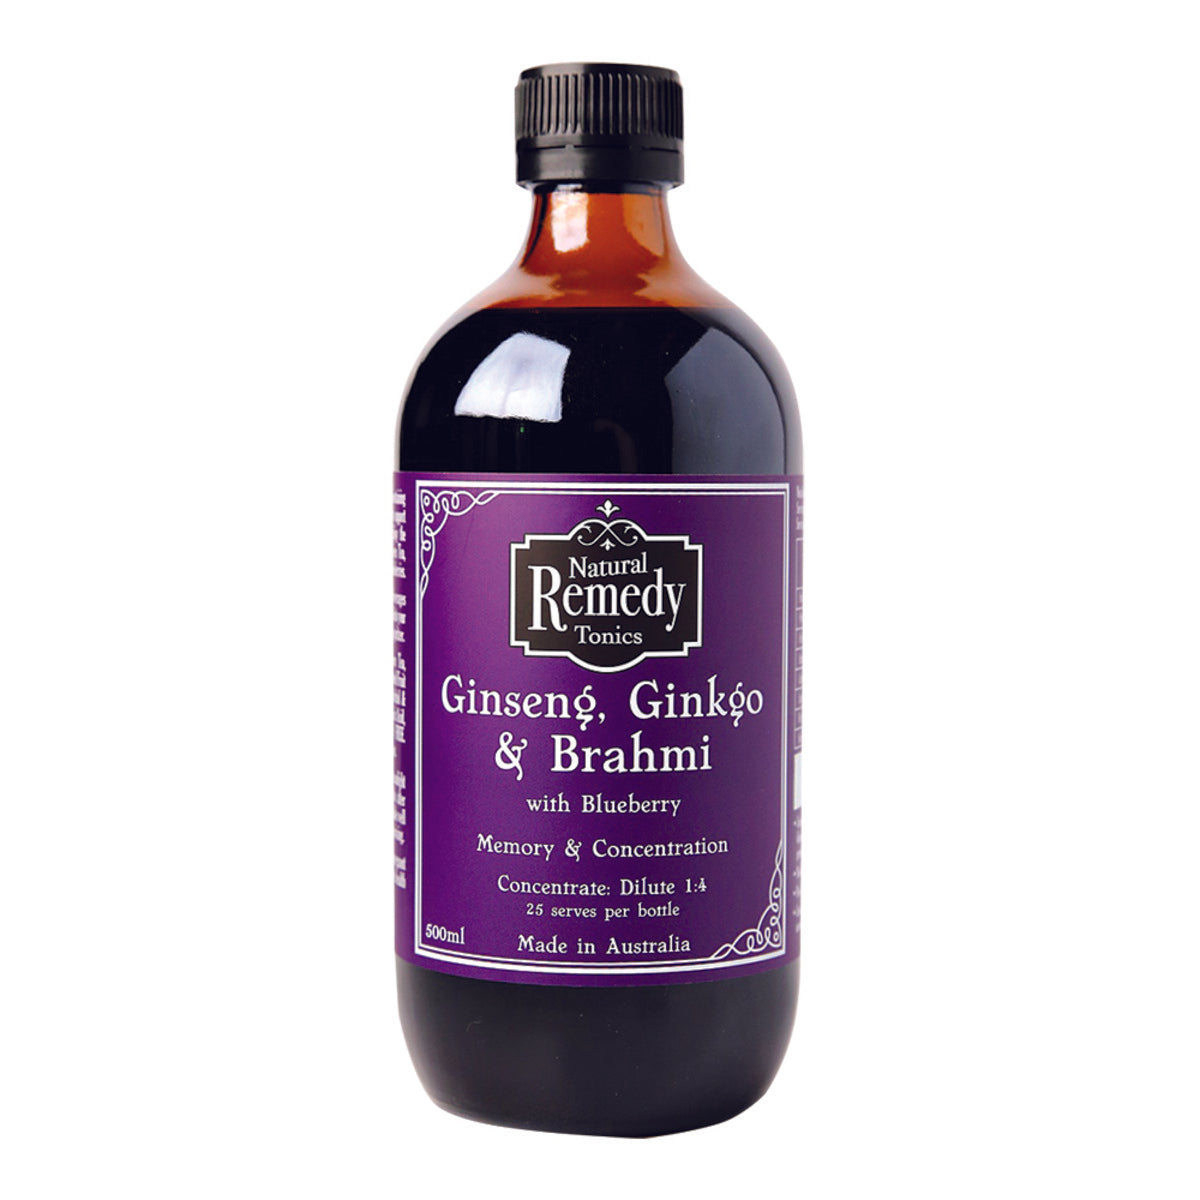 Natural Remedy Tonics - Ginseng Ginkgo and Brahmi